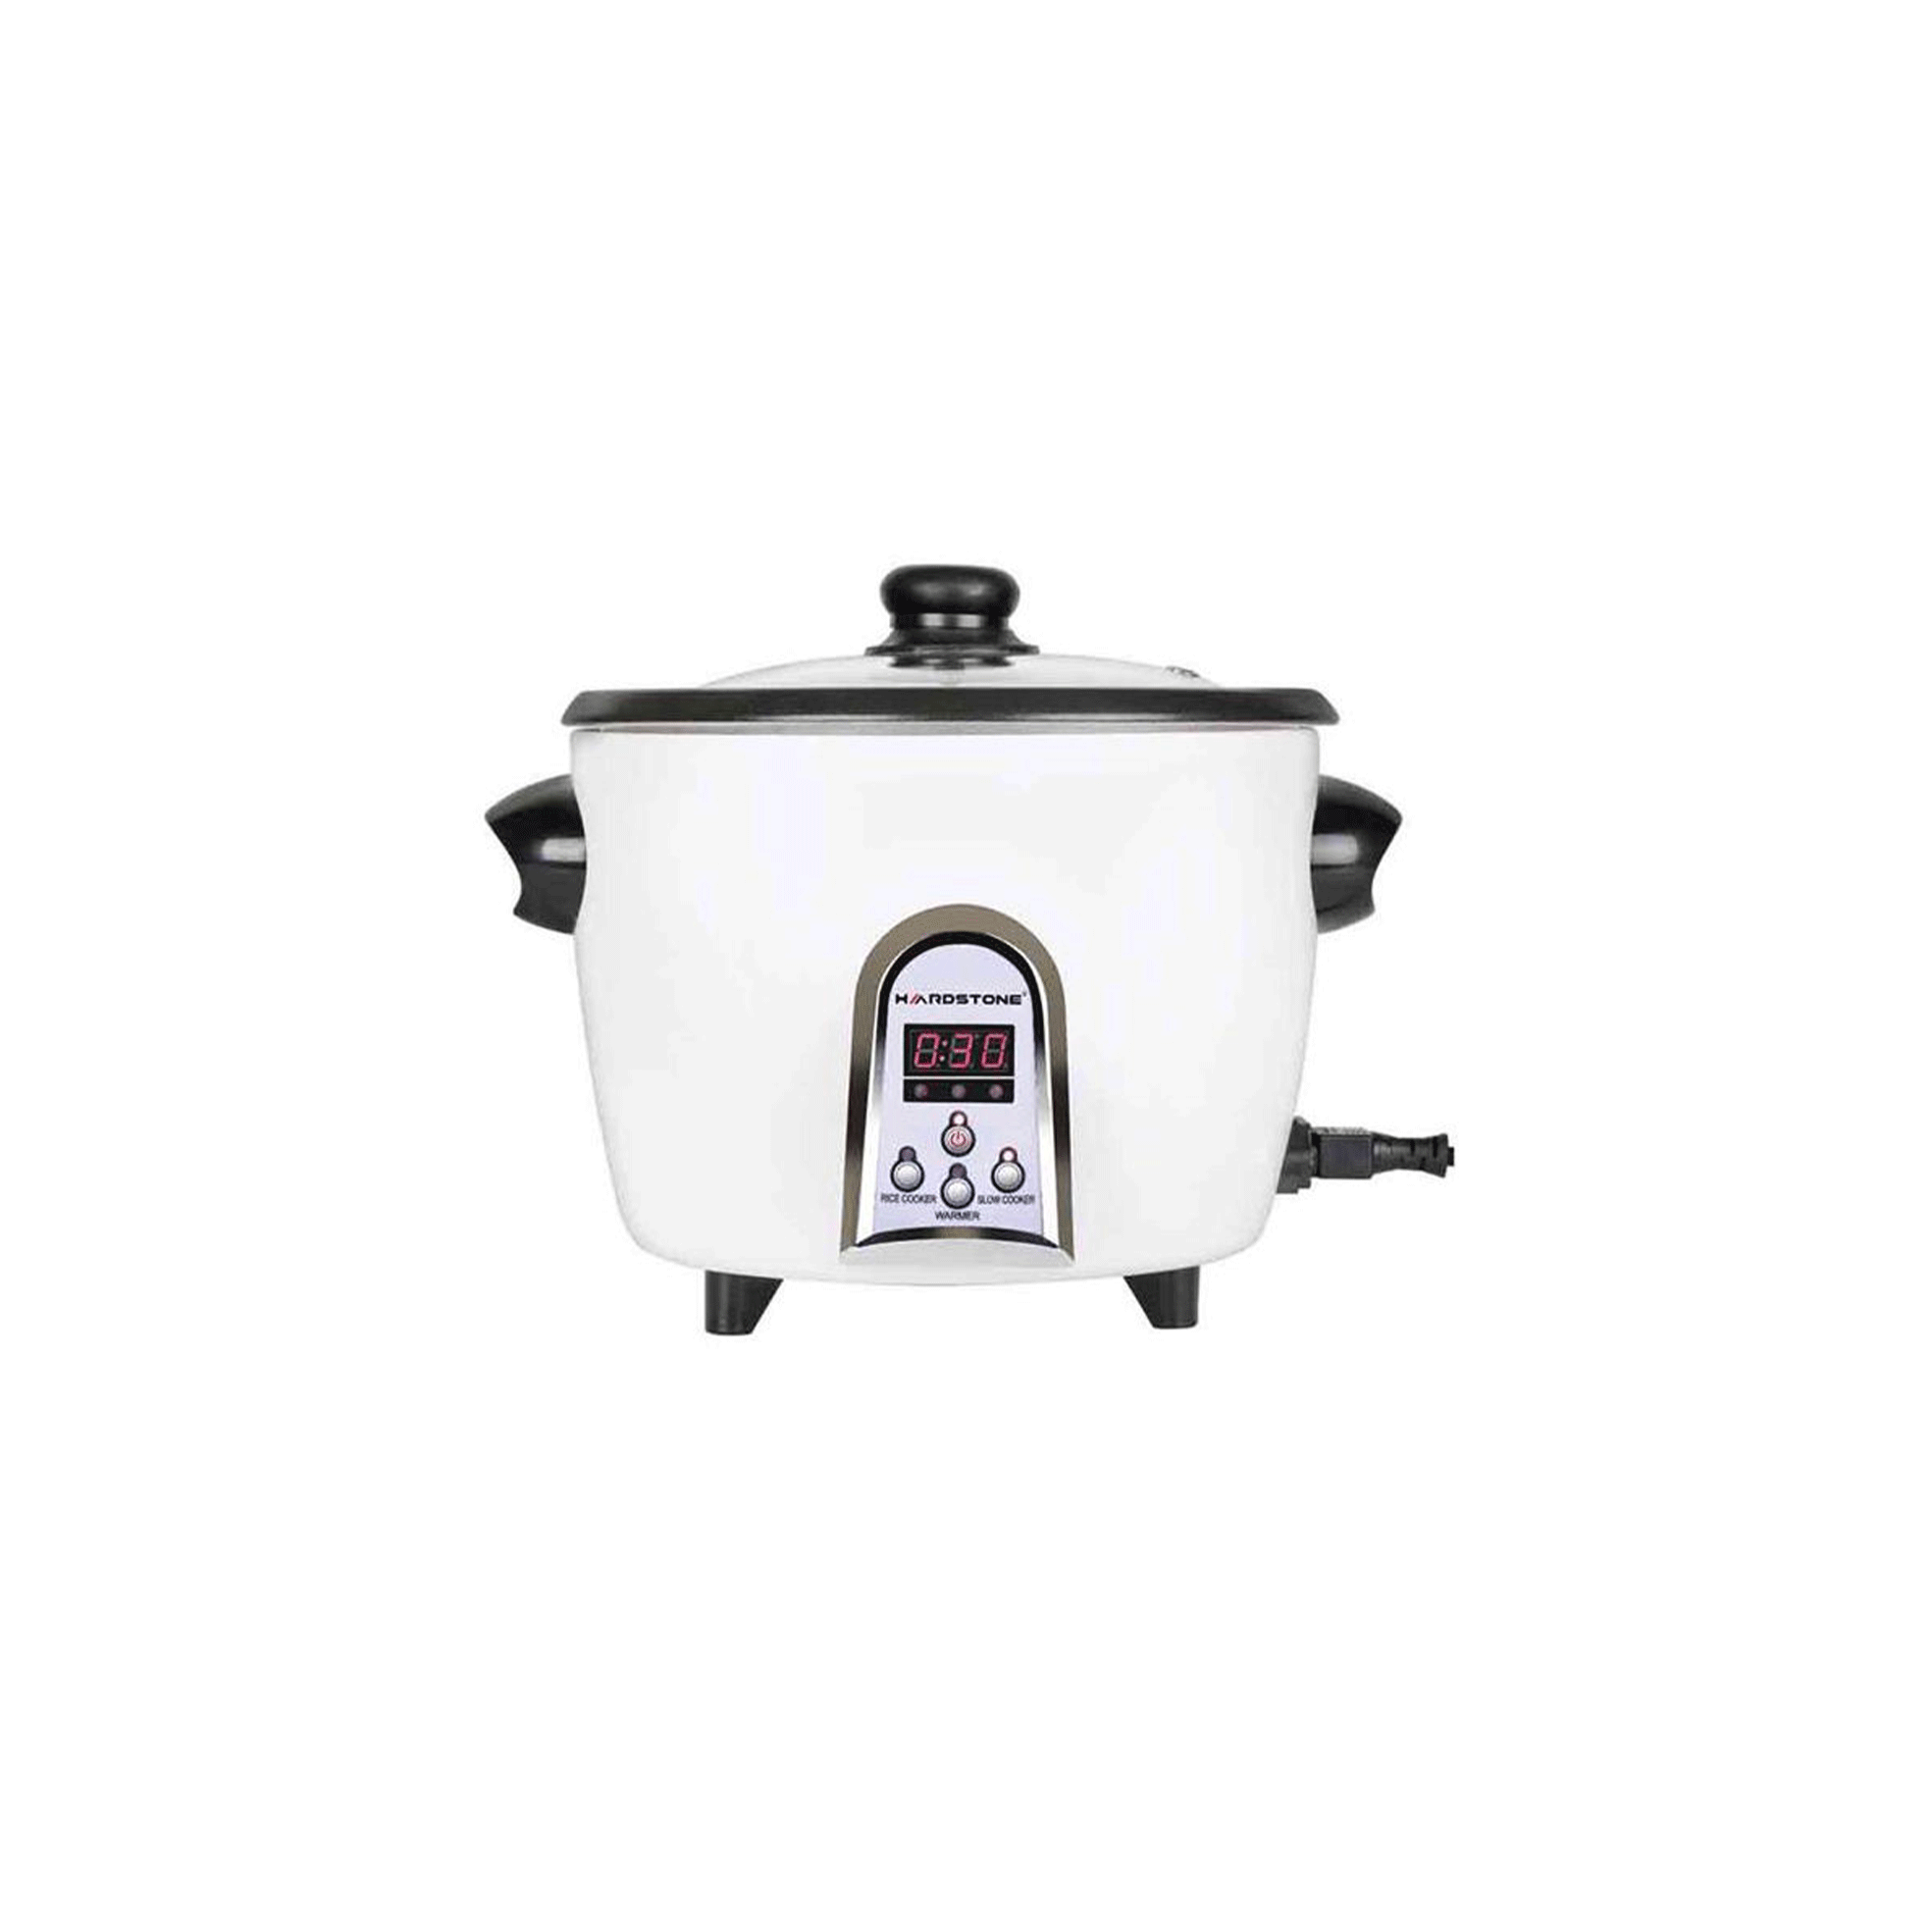 wholesale Hardstone rice cooker model RCM6310W